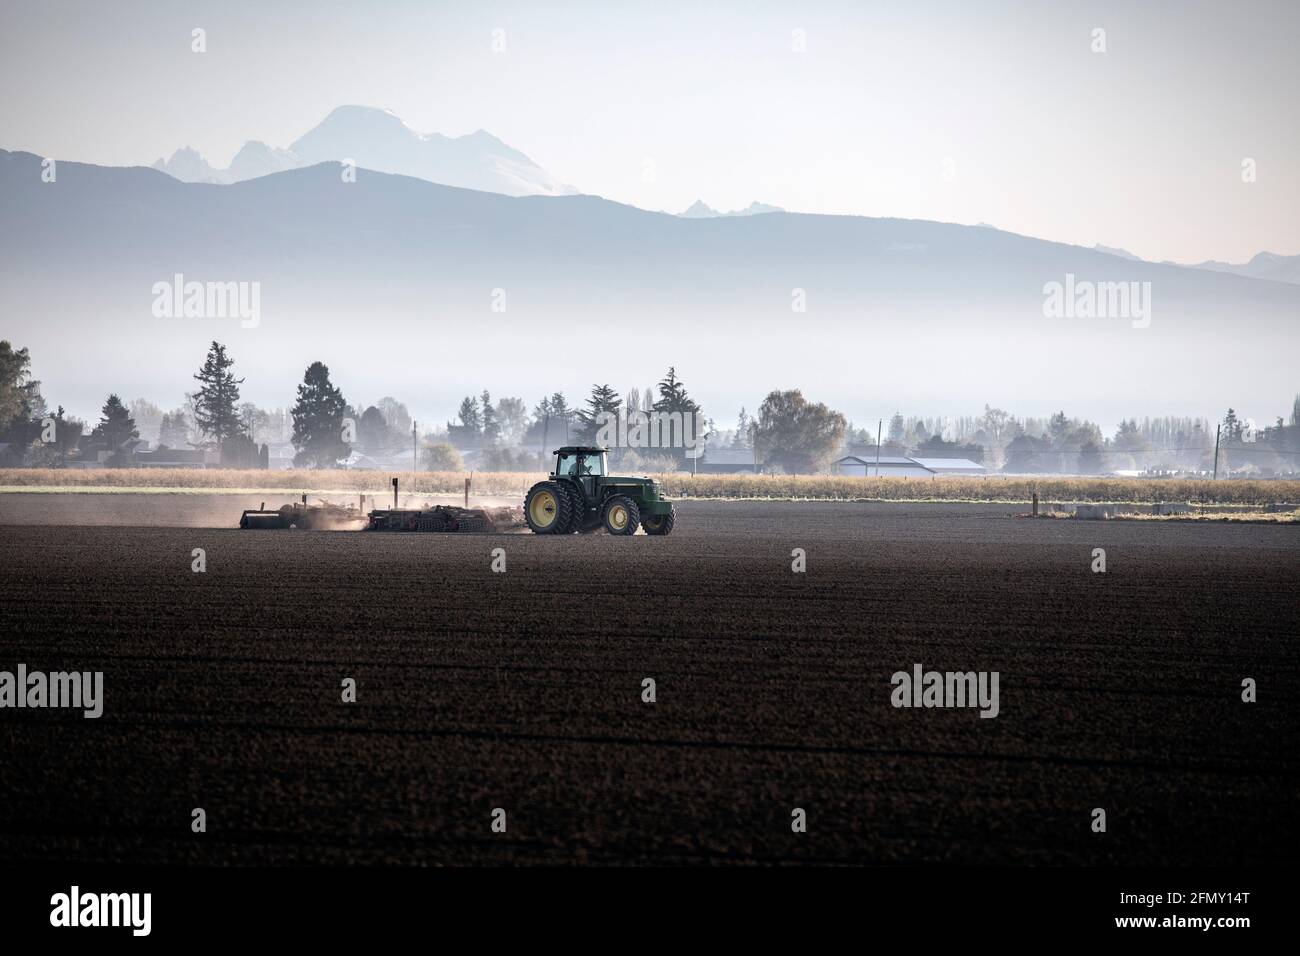 WA20192-00....WASHINGTON - Traktor pflügt ein Feld im Skagit Valley. Stockfoto